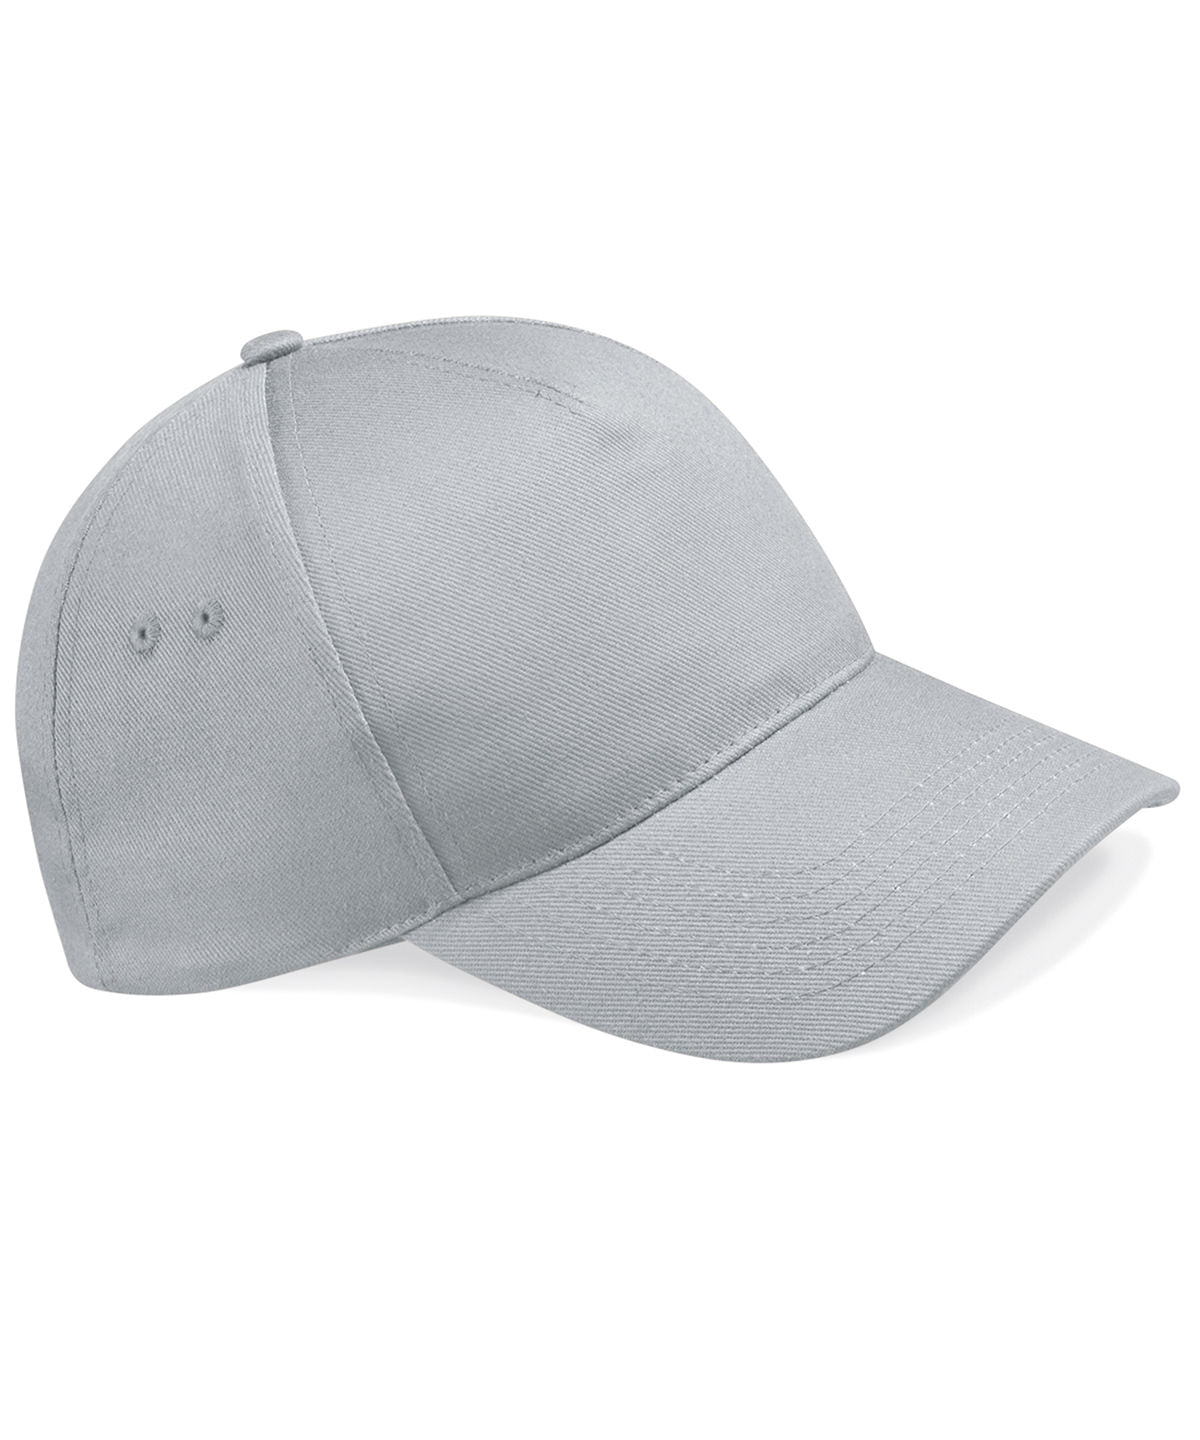 Personalised Caps - Light Grey Beechfield Ultimate 5-panel cap